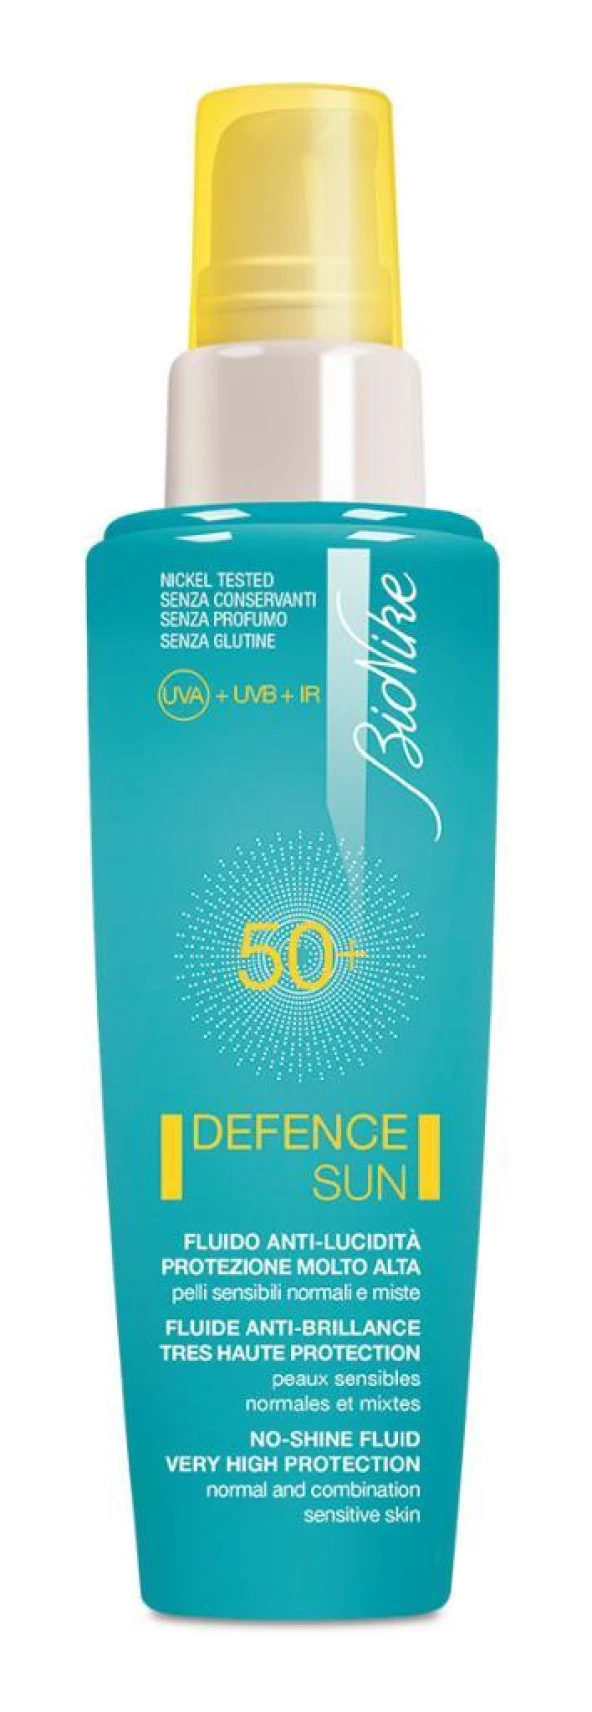 BioNike Defence Sun No-Shine Fluid SPF50+ 50 ml